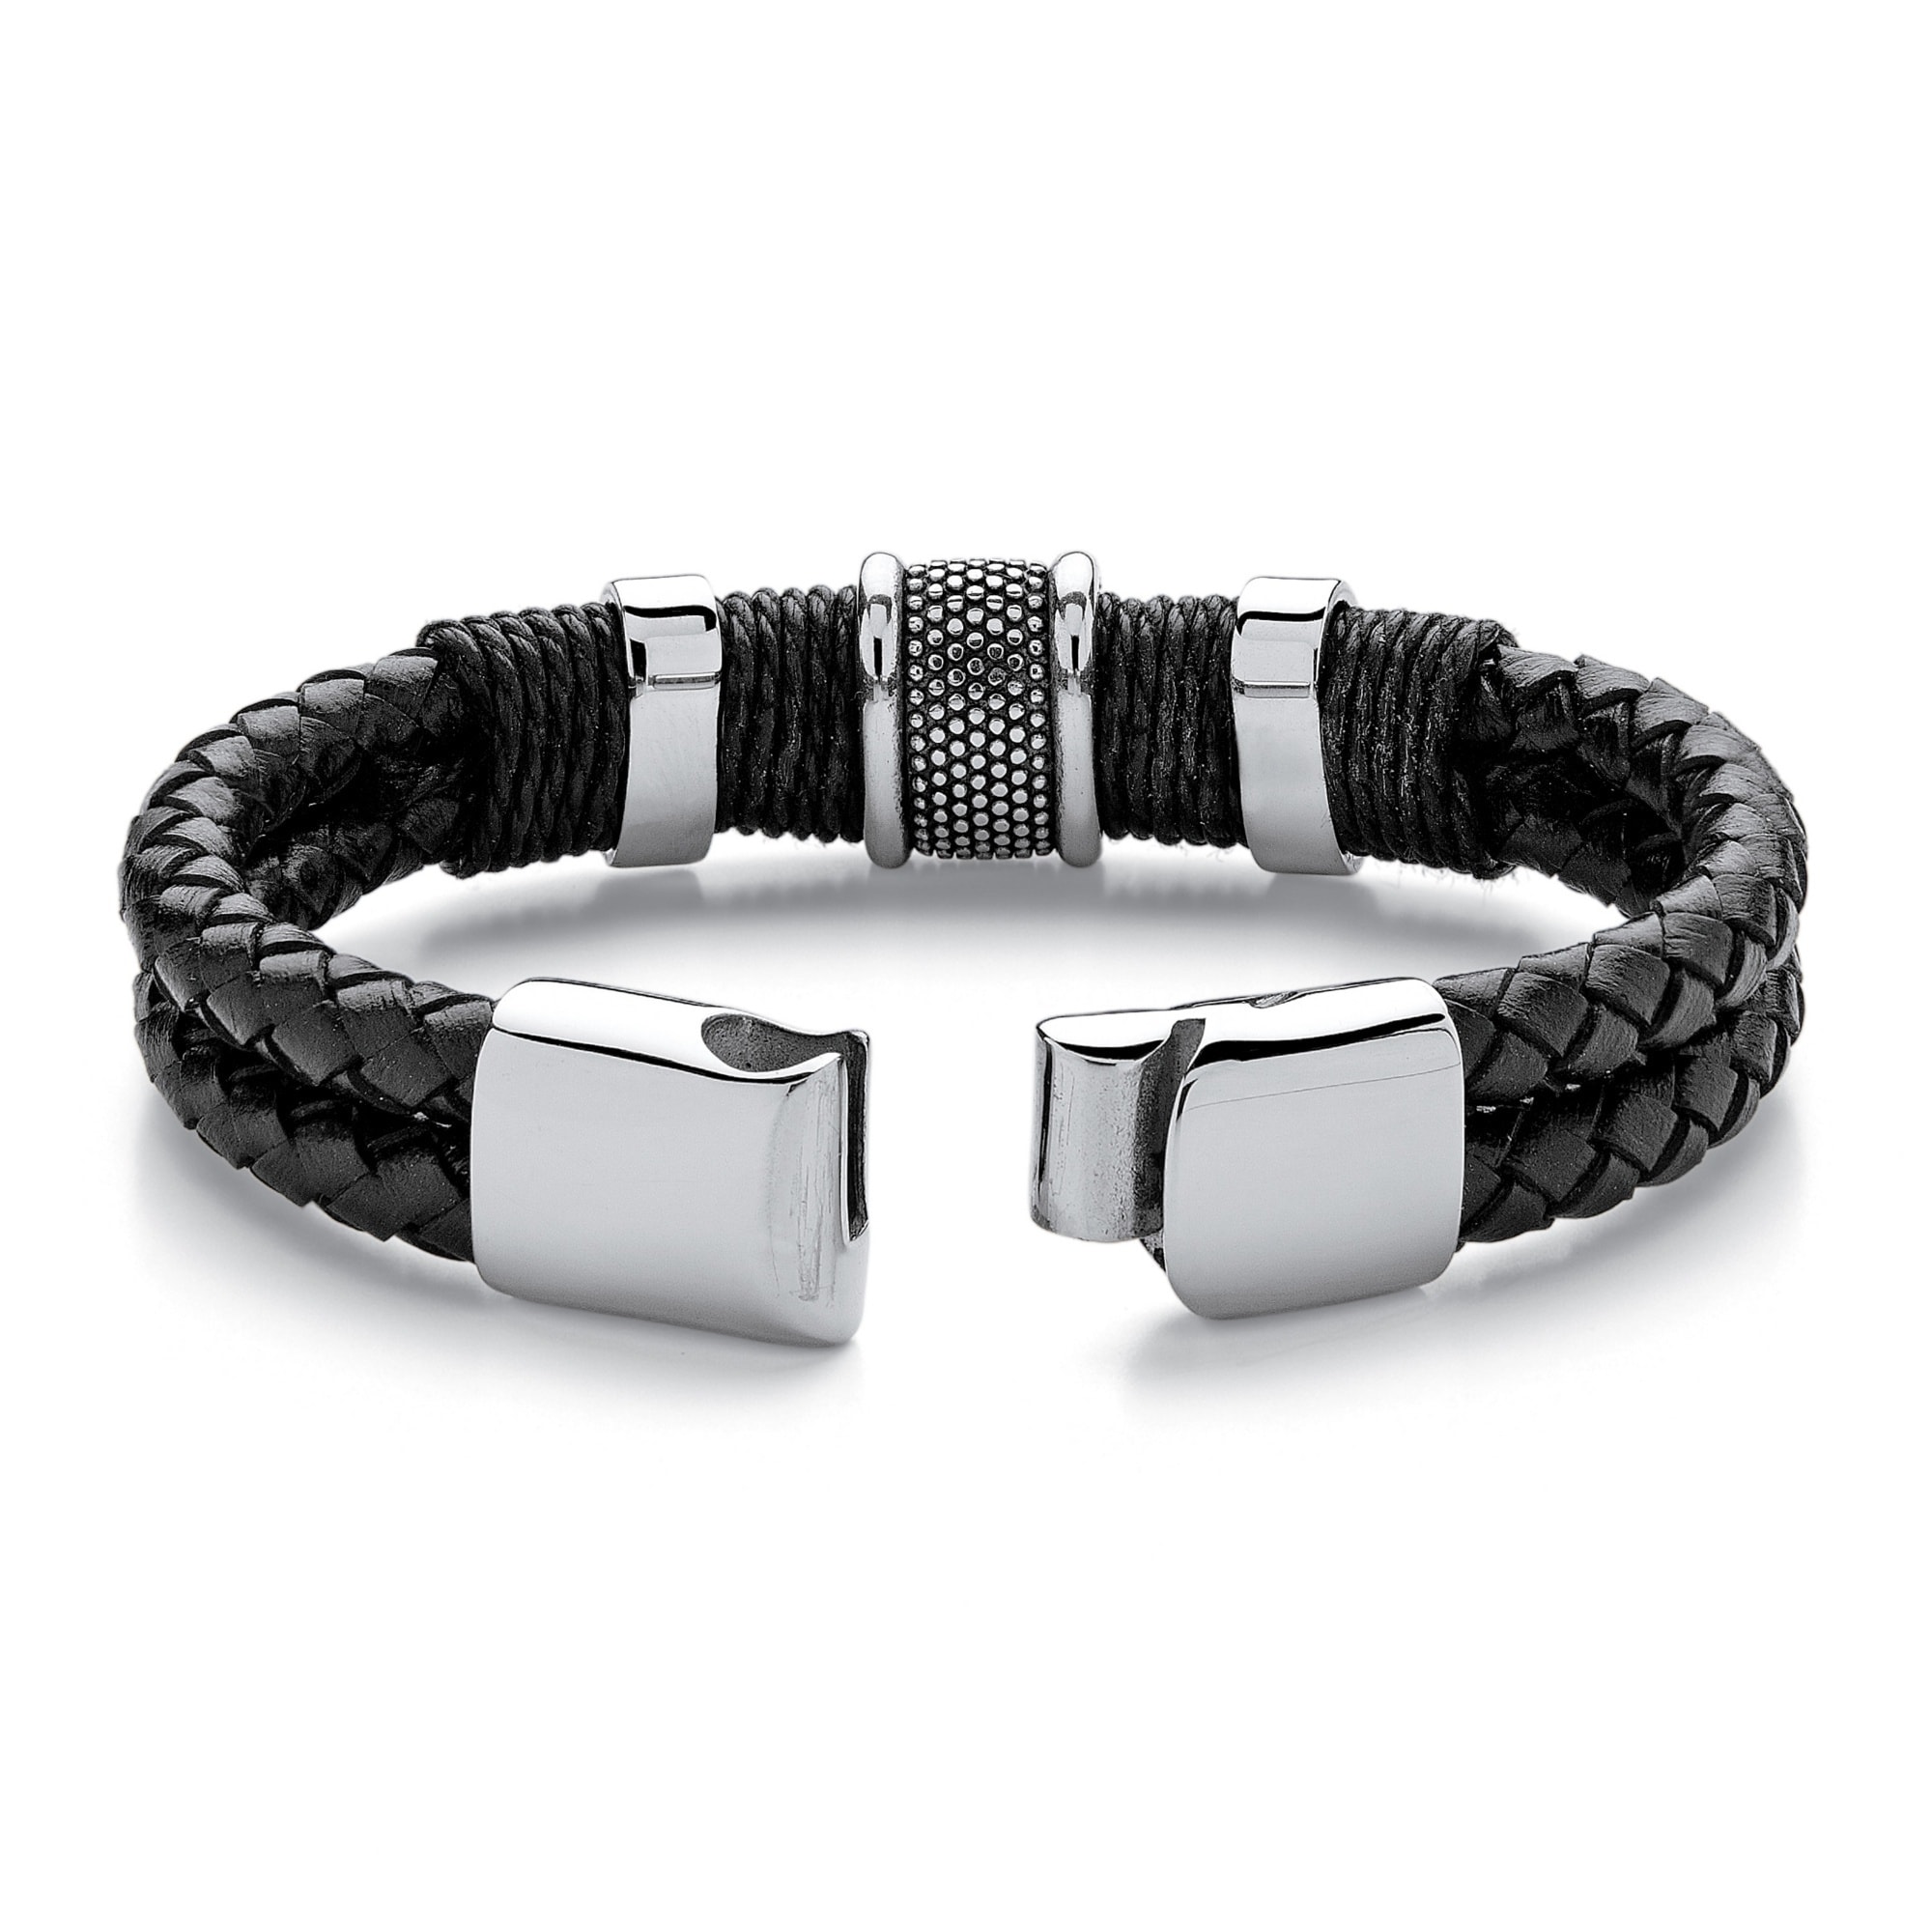 TEMEGO Jewelry Mens Leather Braided Bracelet,Stainless Steel Clasp,Black-7.5,8,9